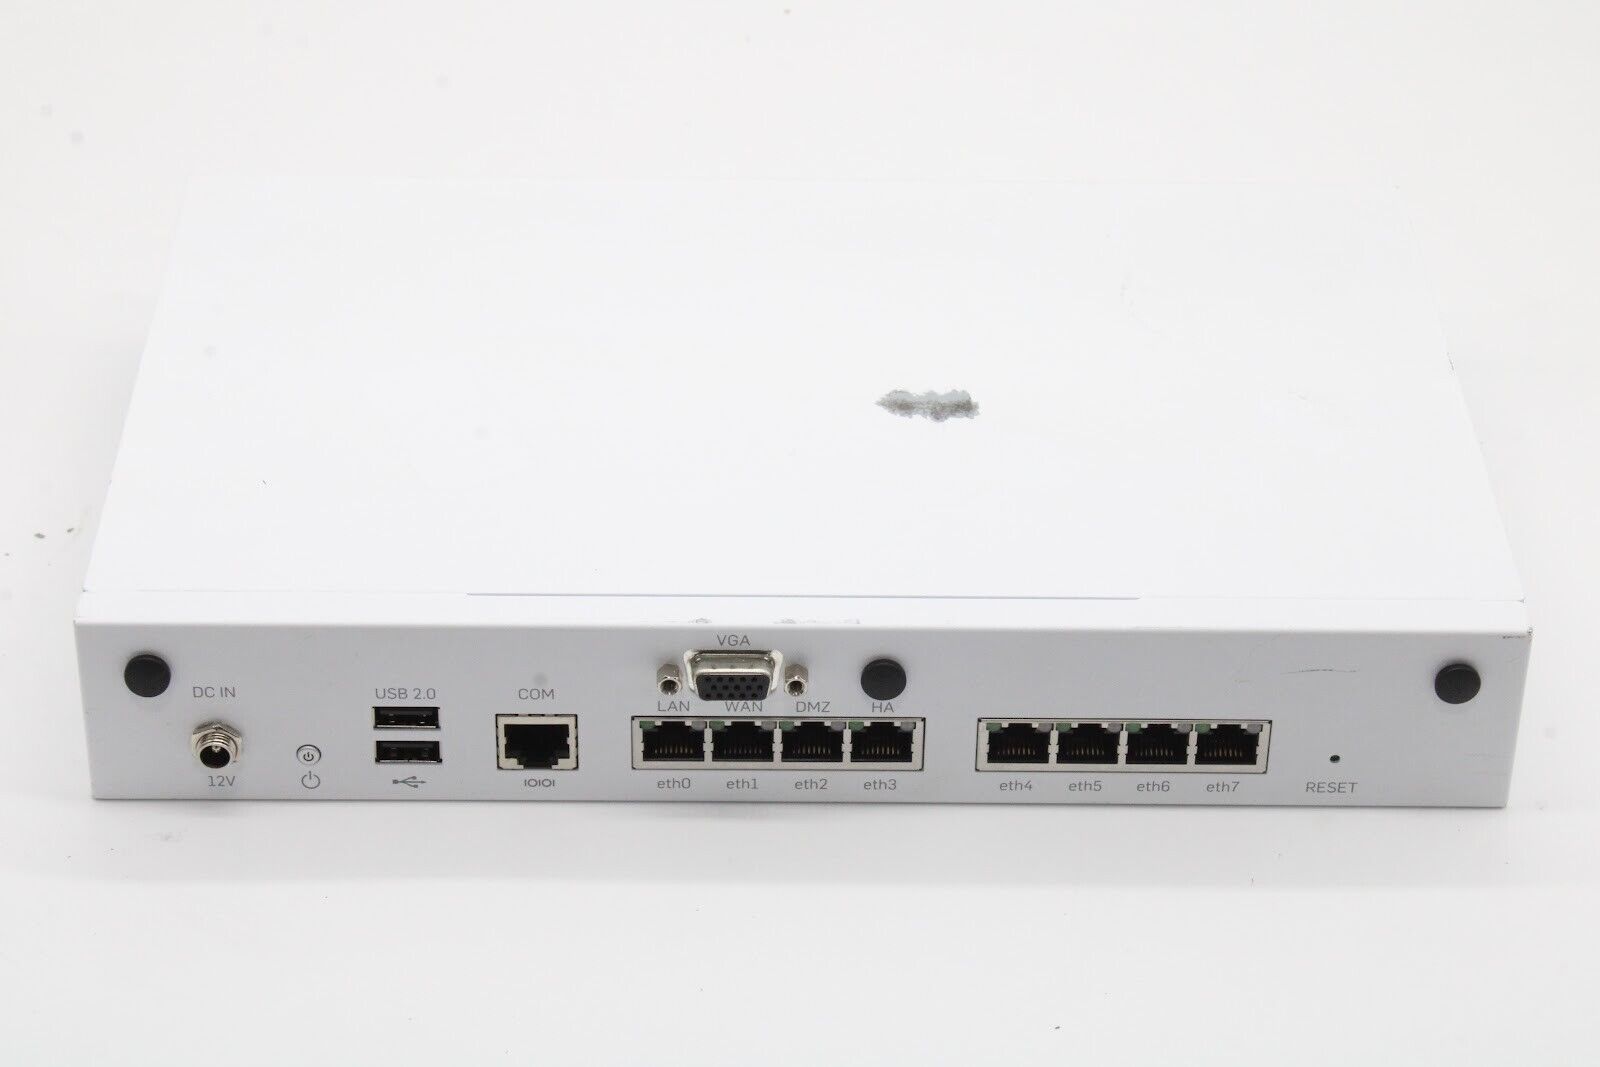 Sophos SG 135 Rev. 1 Network/Security Firewall Appliance